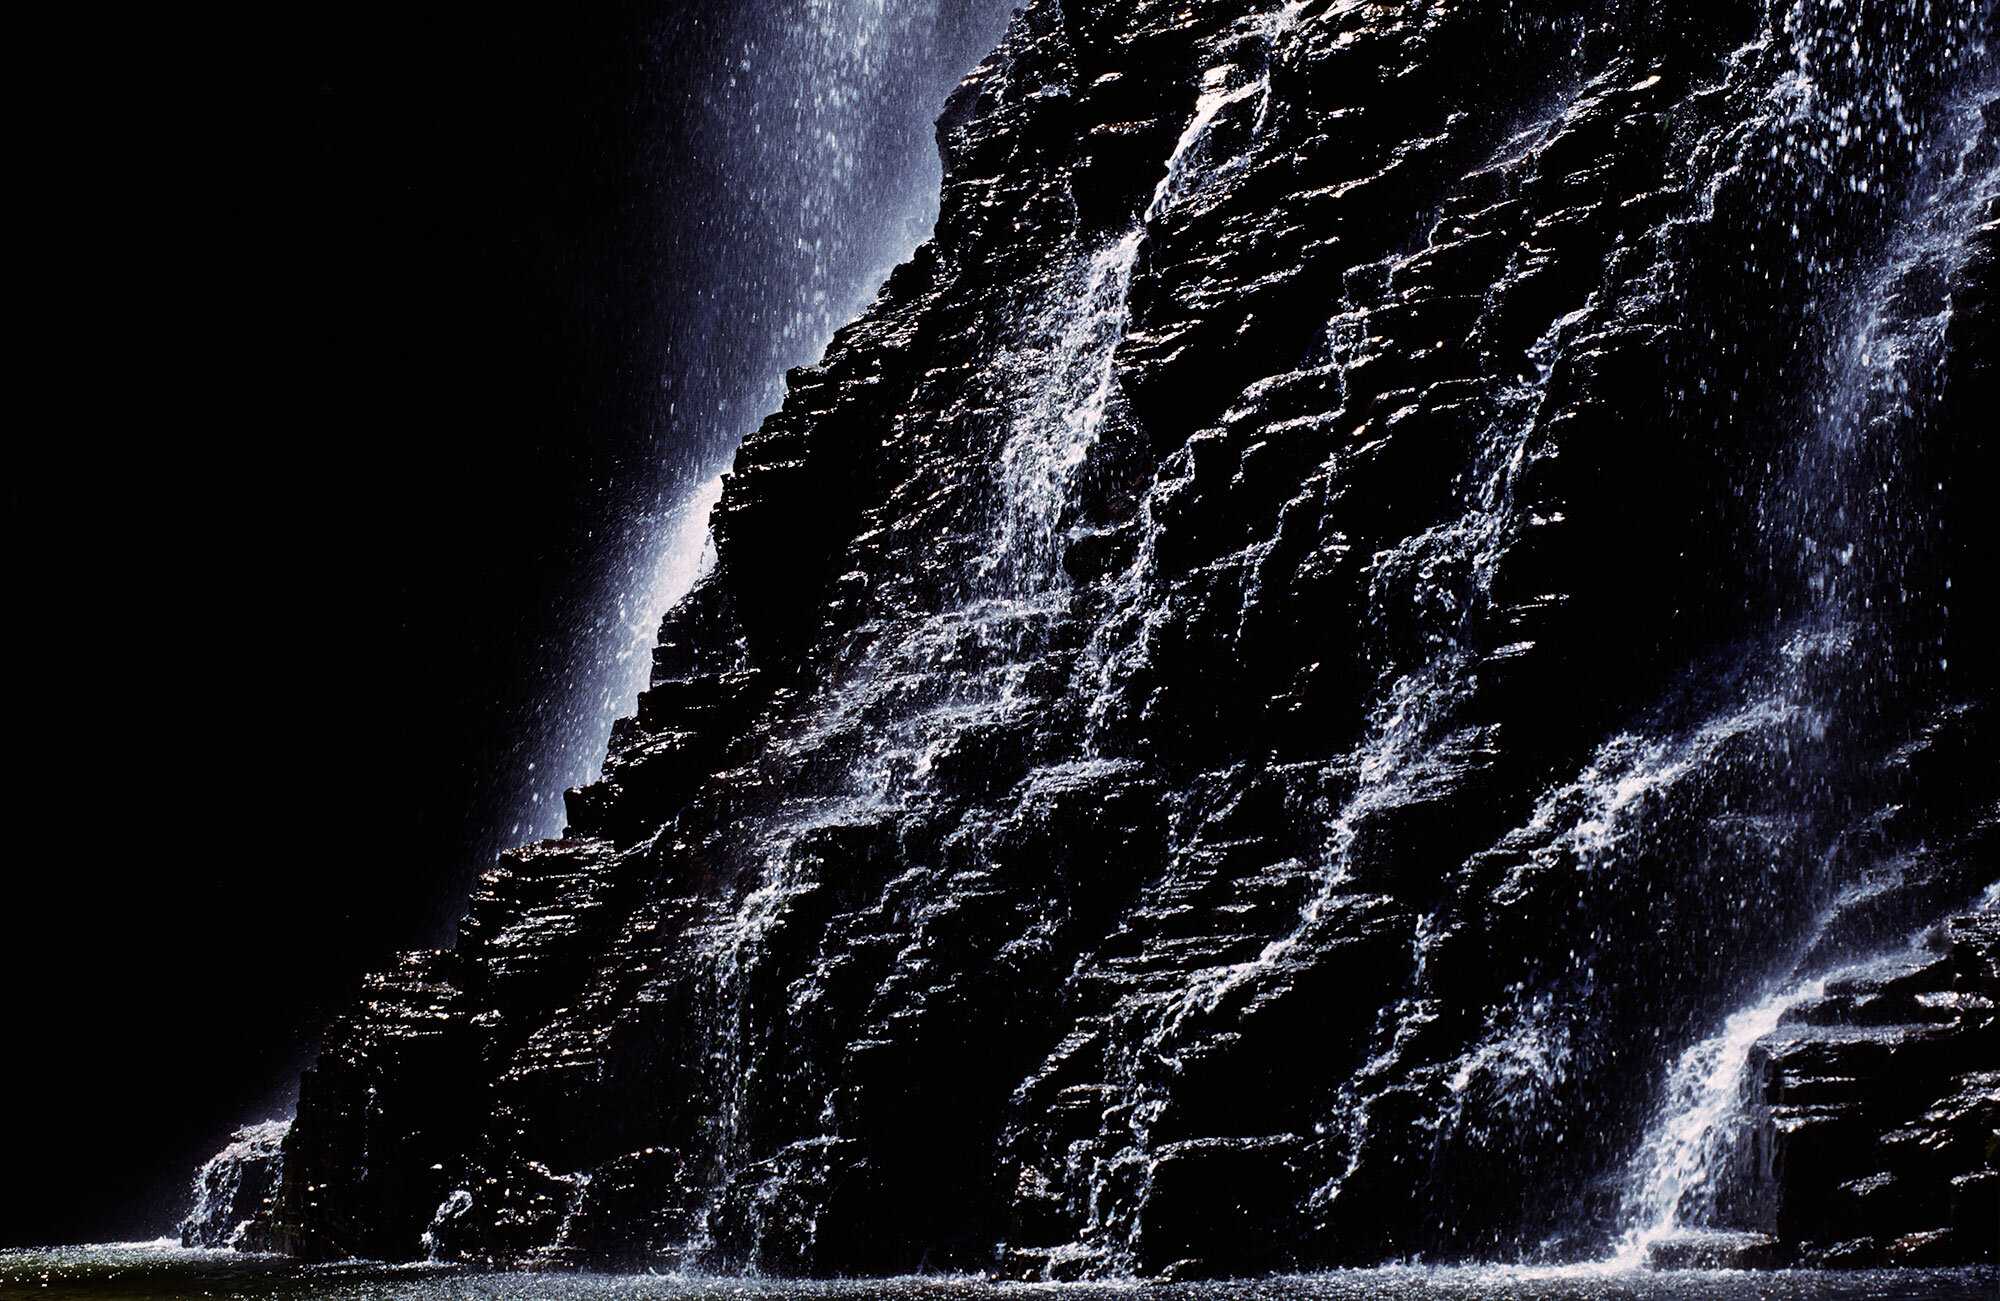 jim-jim falls, kakadu, northern territory 1997